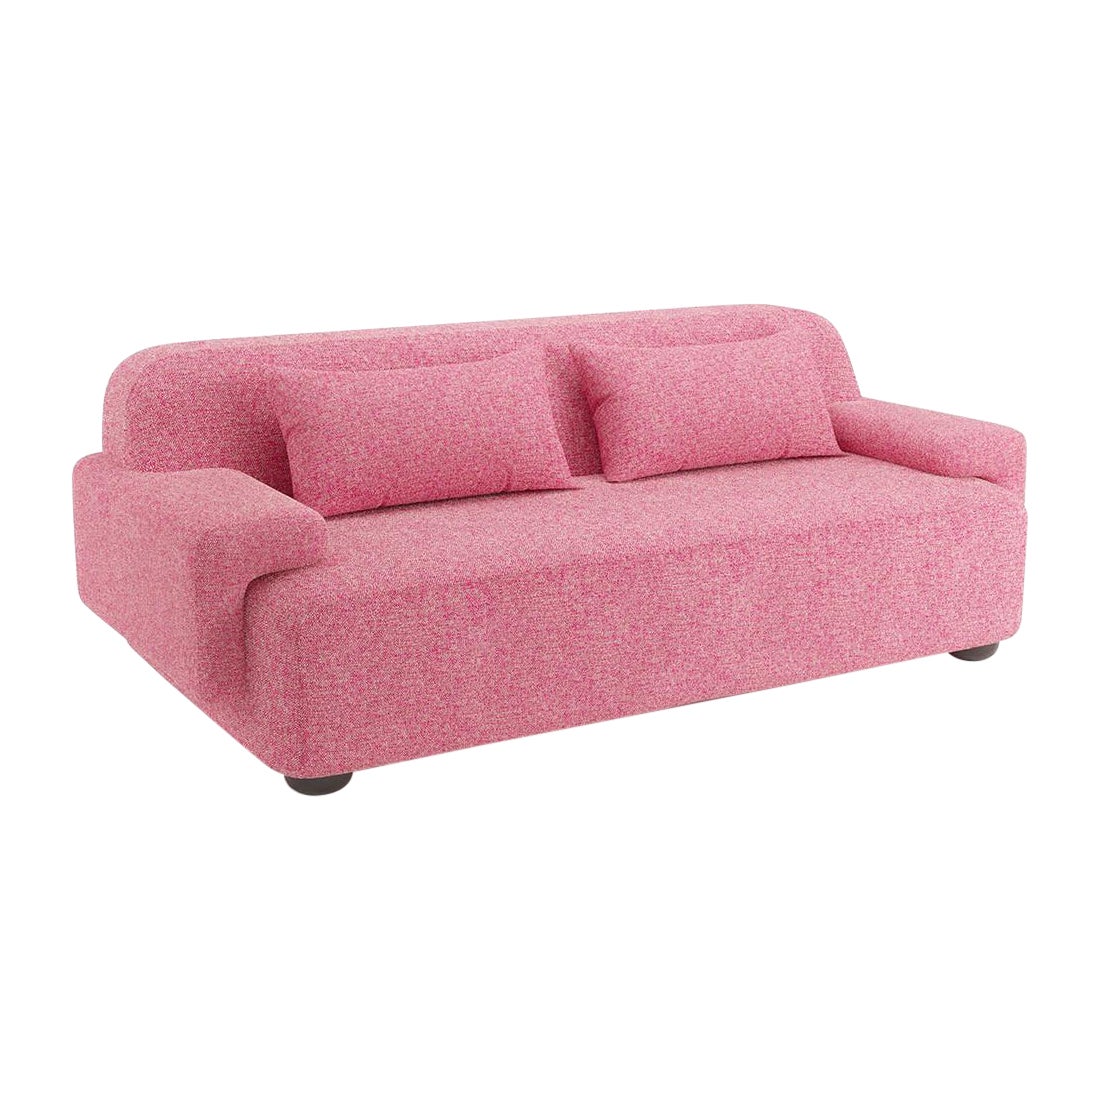 Popus Editions Lena 3 Seater Sofa in Fuschia London Linen Fabric For Sale